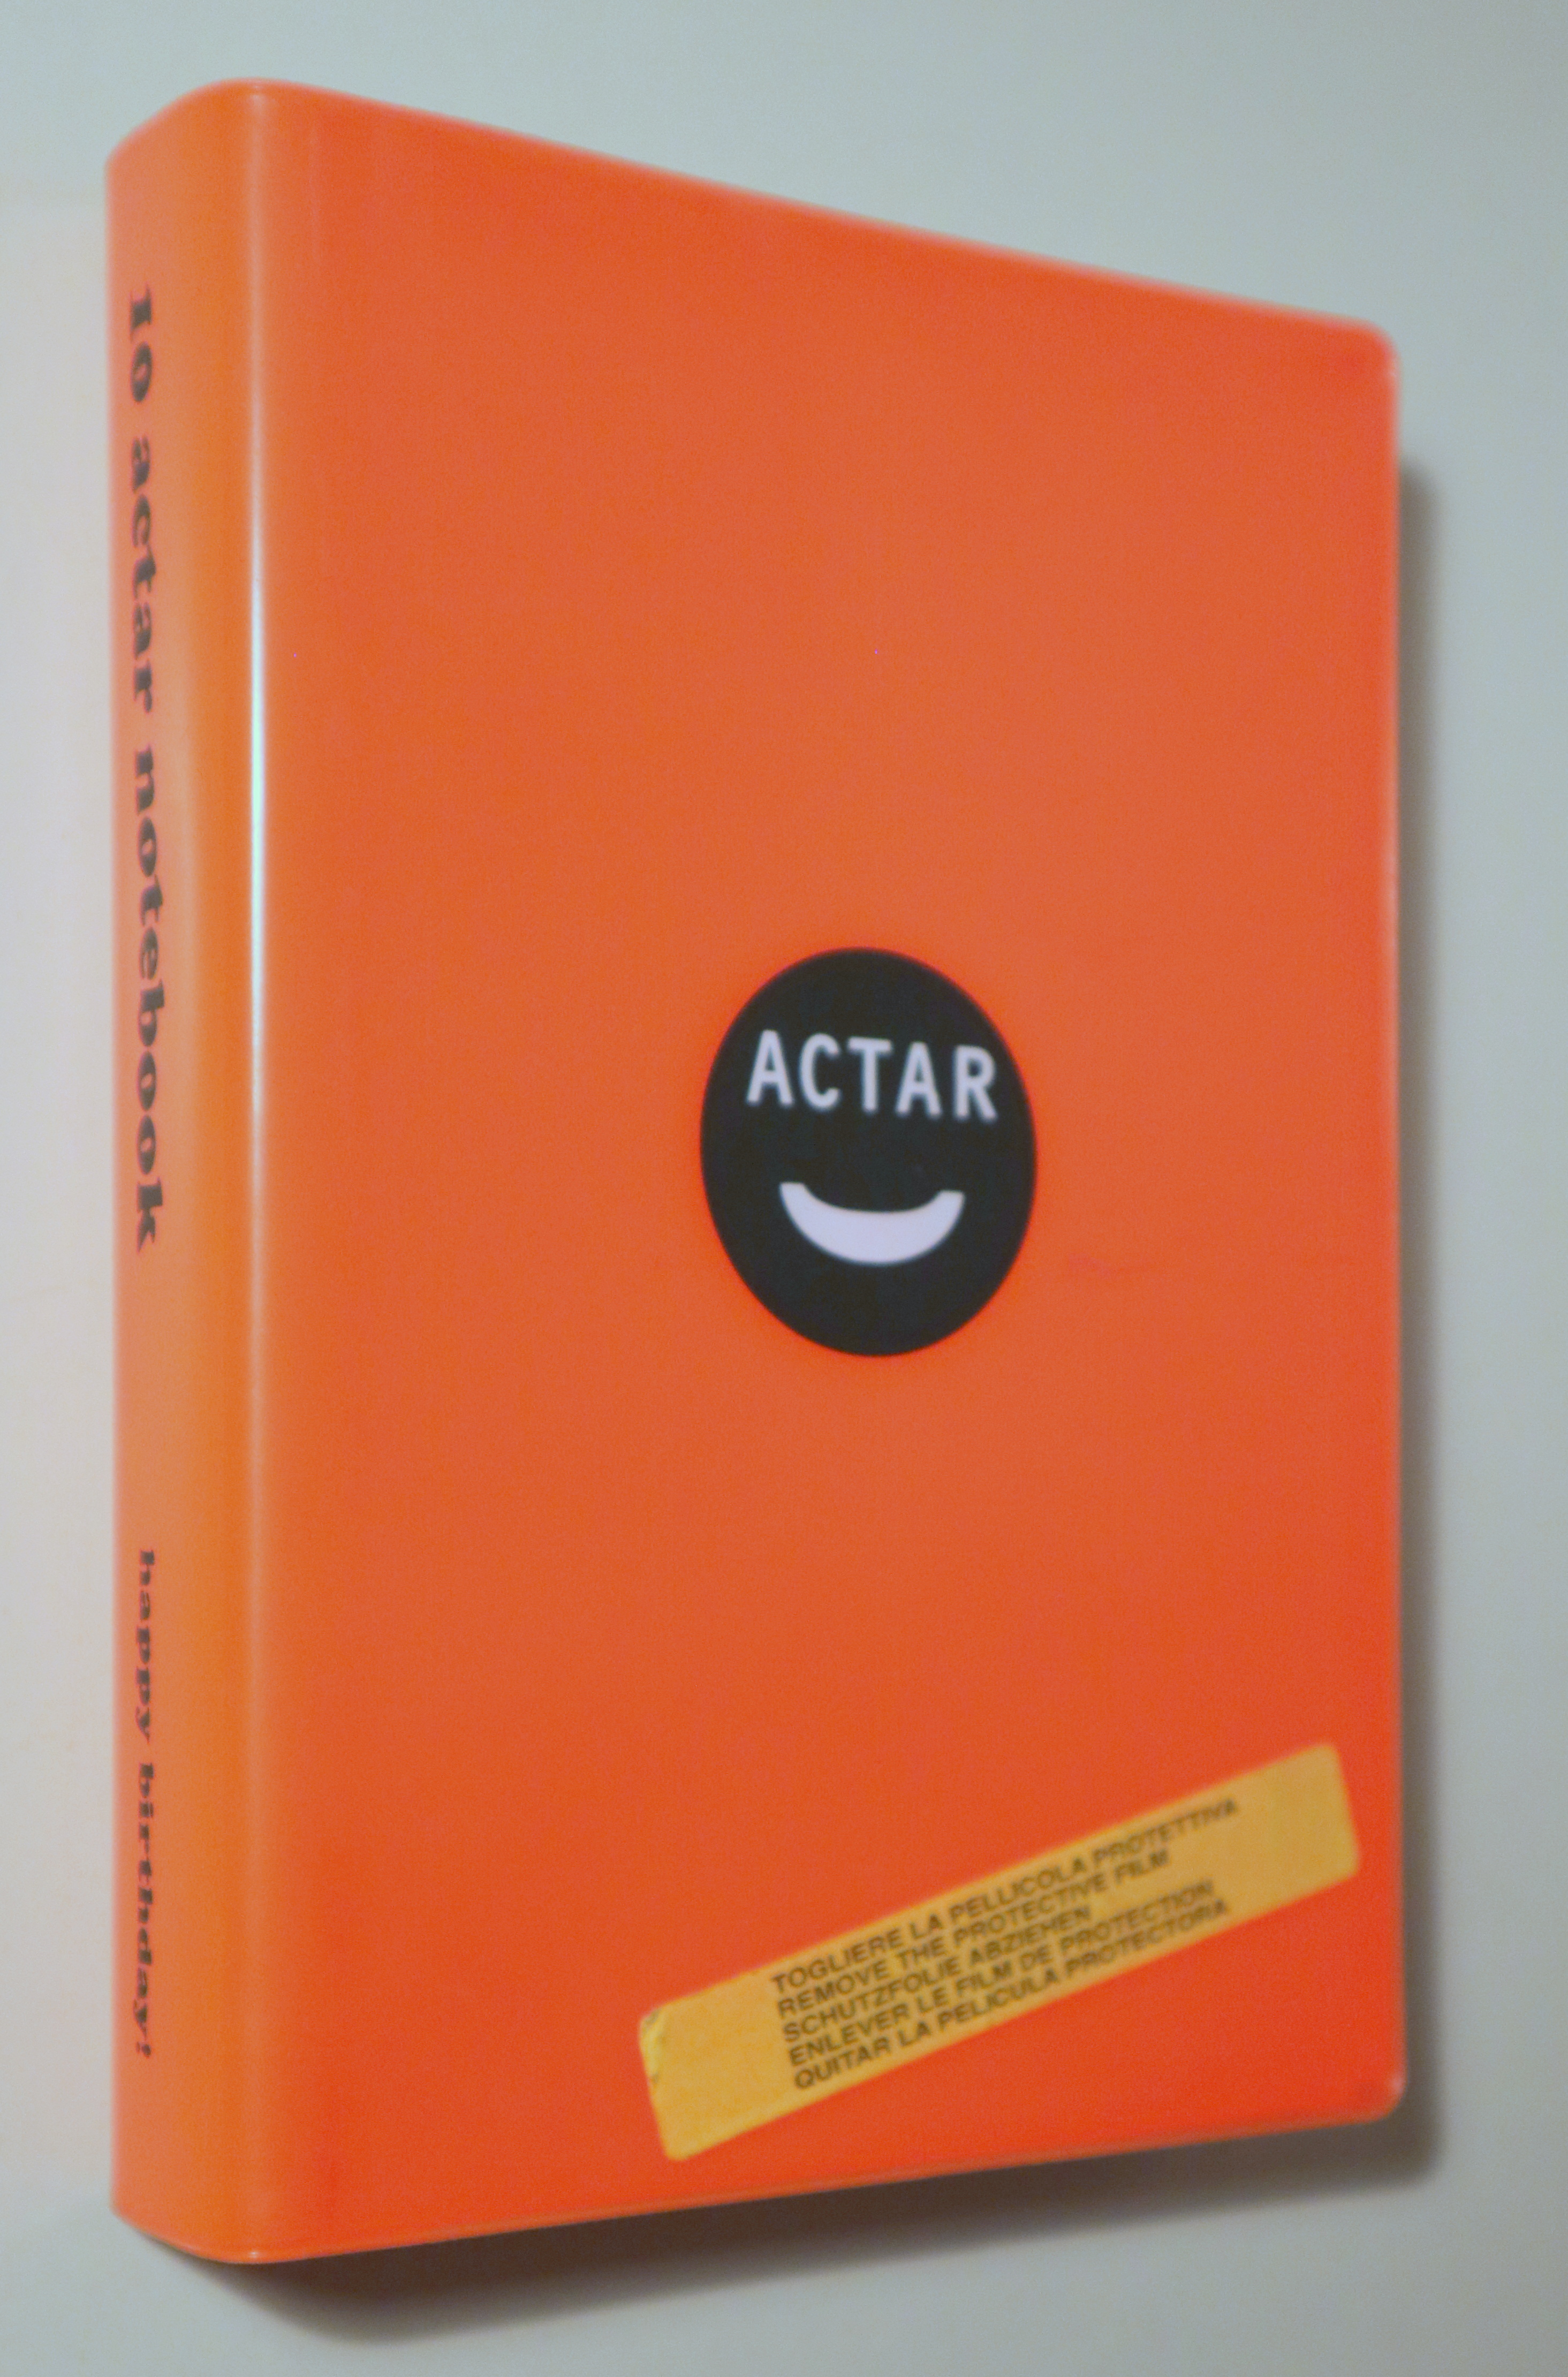 ACTAR 1994-2004. 10 ACTAR NOTEBOOK - Barcelona 2004 - Muy ilustrado